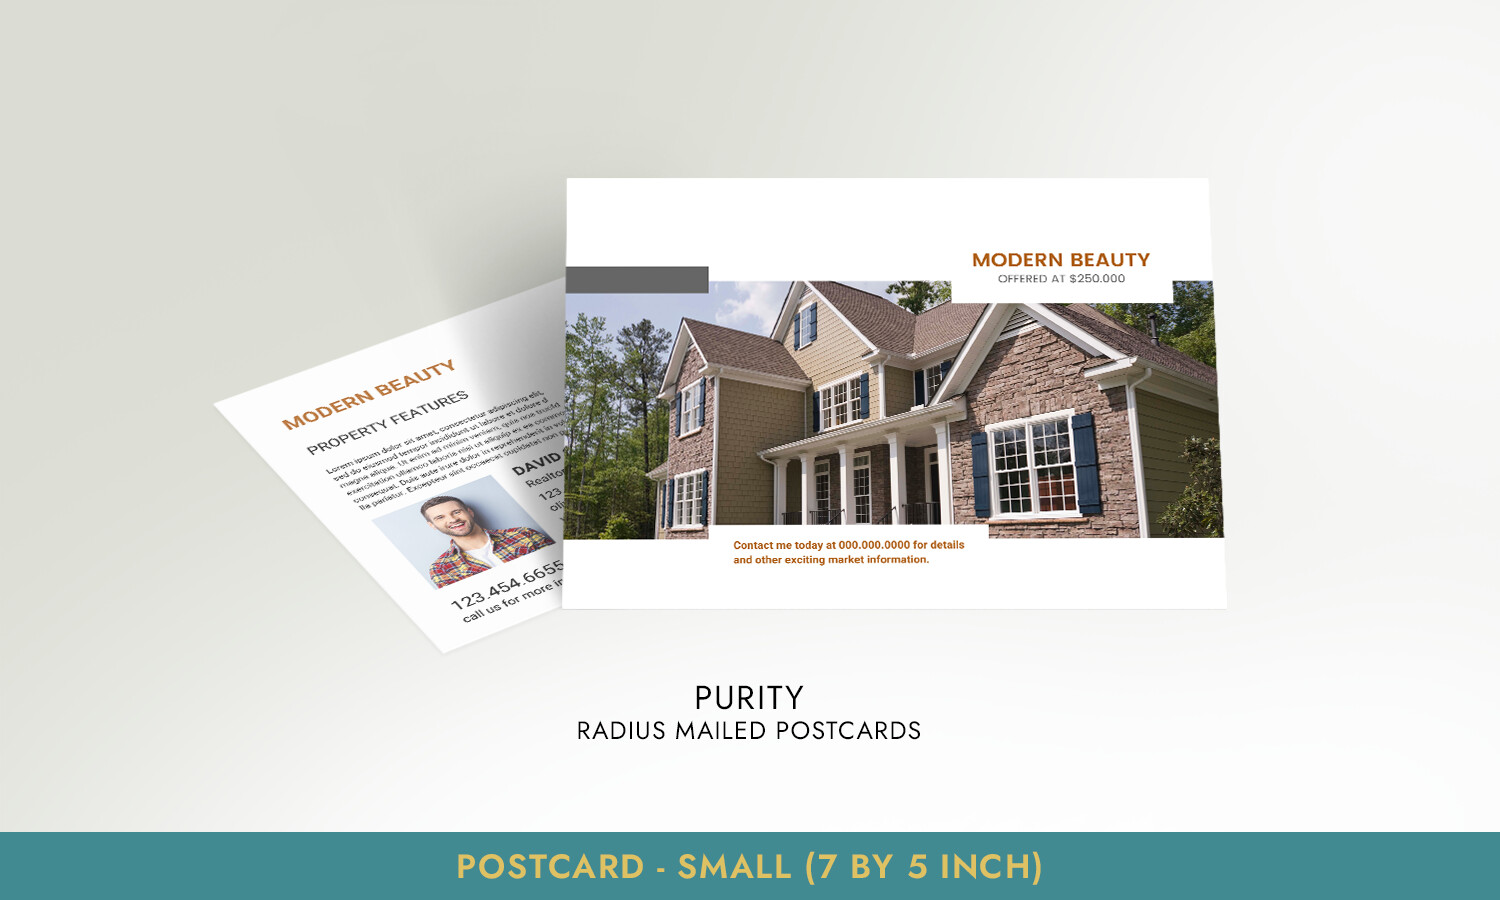 Radius Mailed Postcards - Small